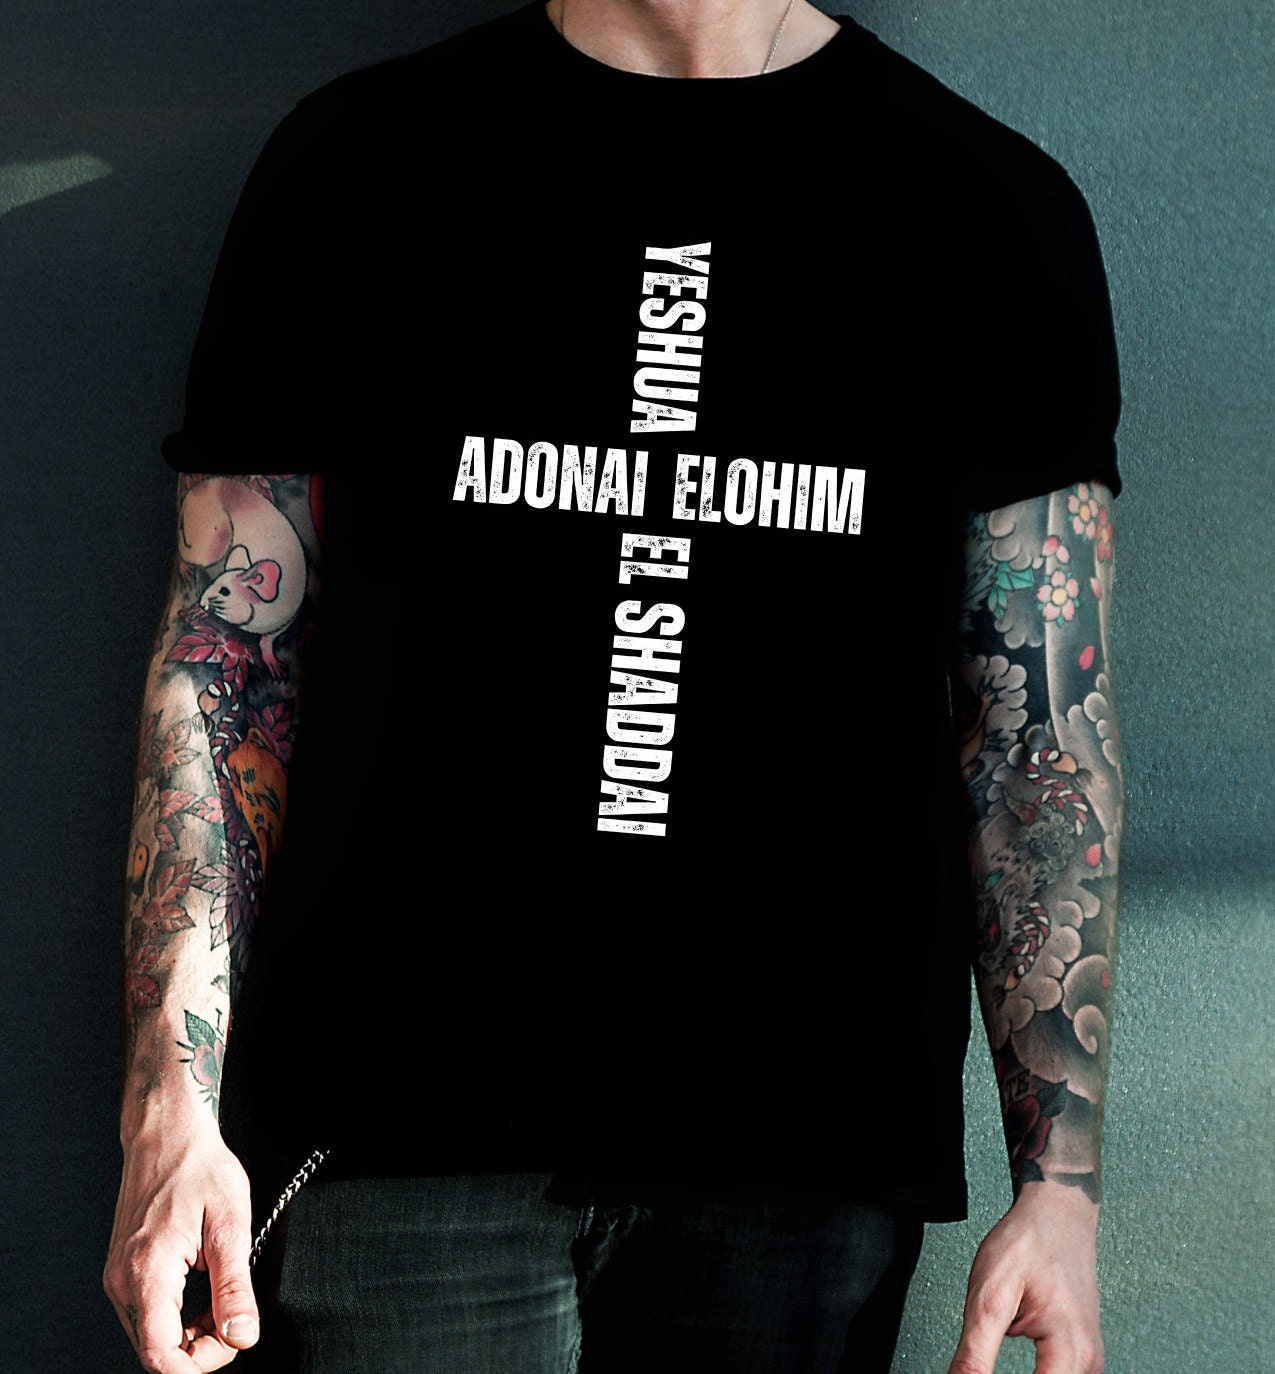 Adonai Elohim  Christian quotes tattoos, Hebrew language, Christian quotes